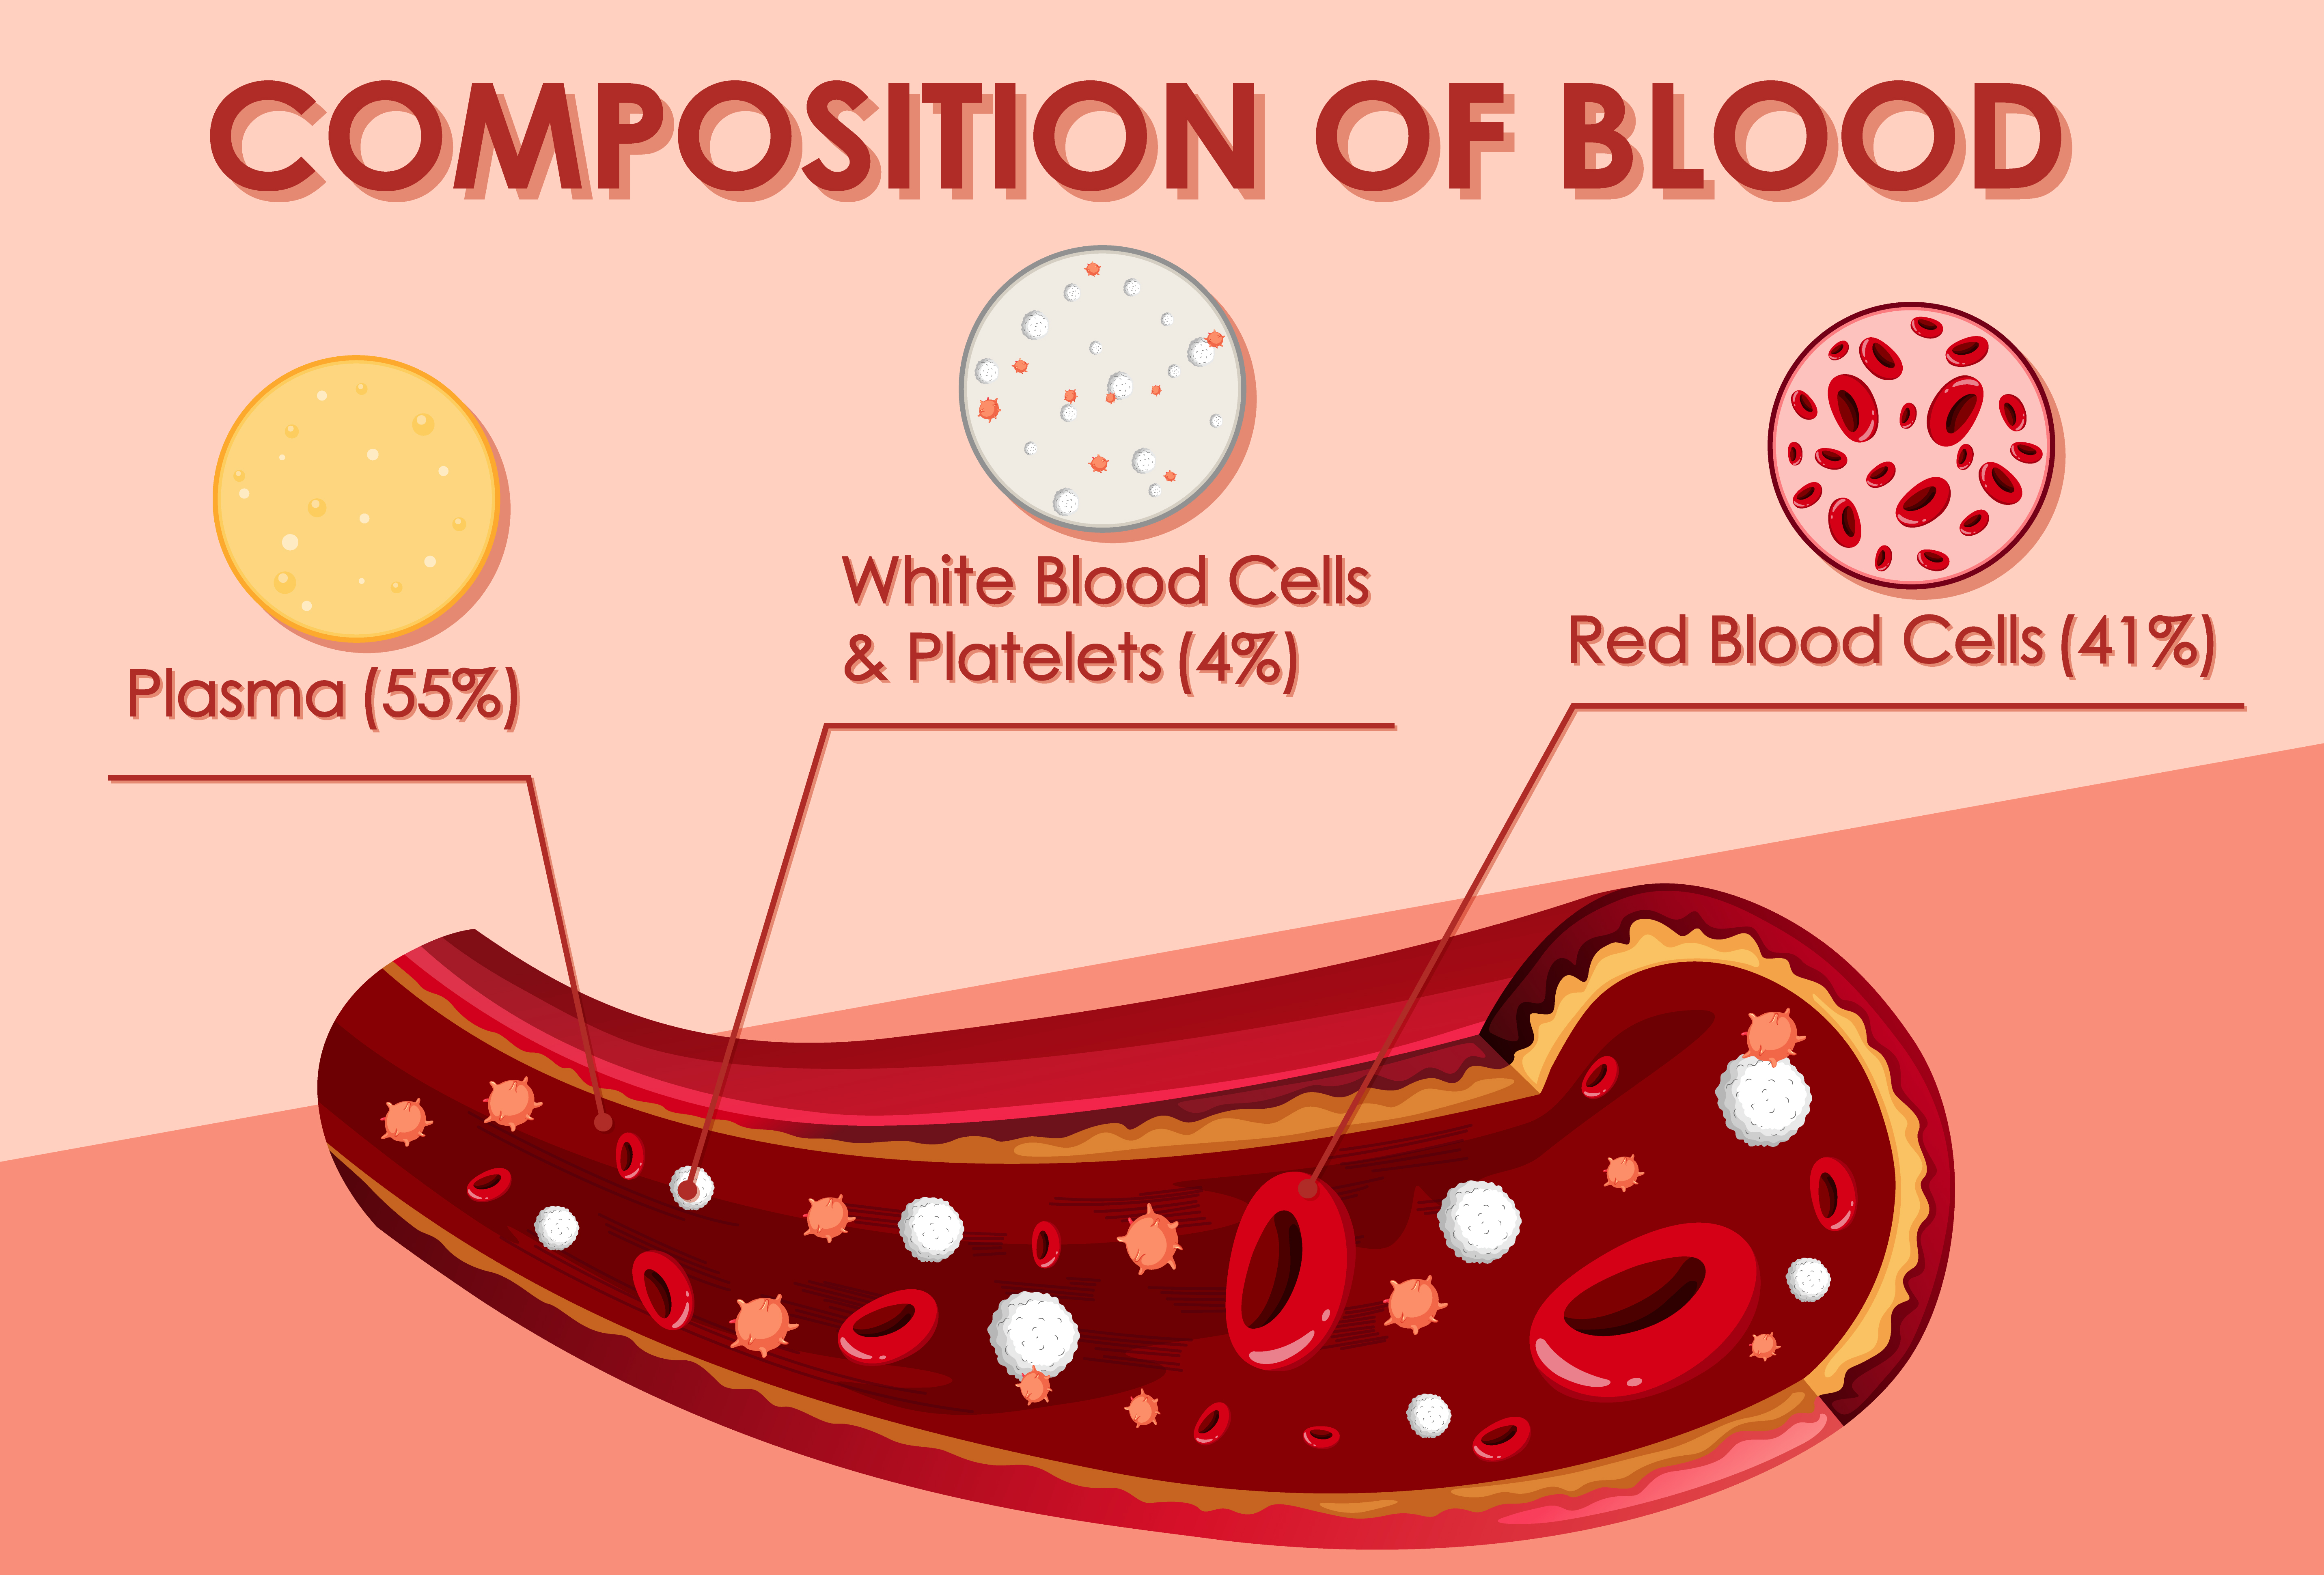 Hemoglobin red blood cell